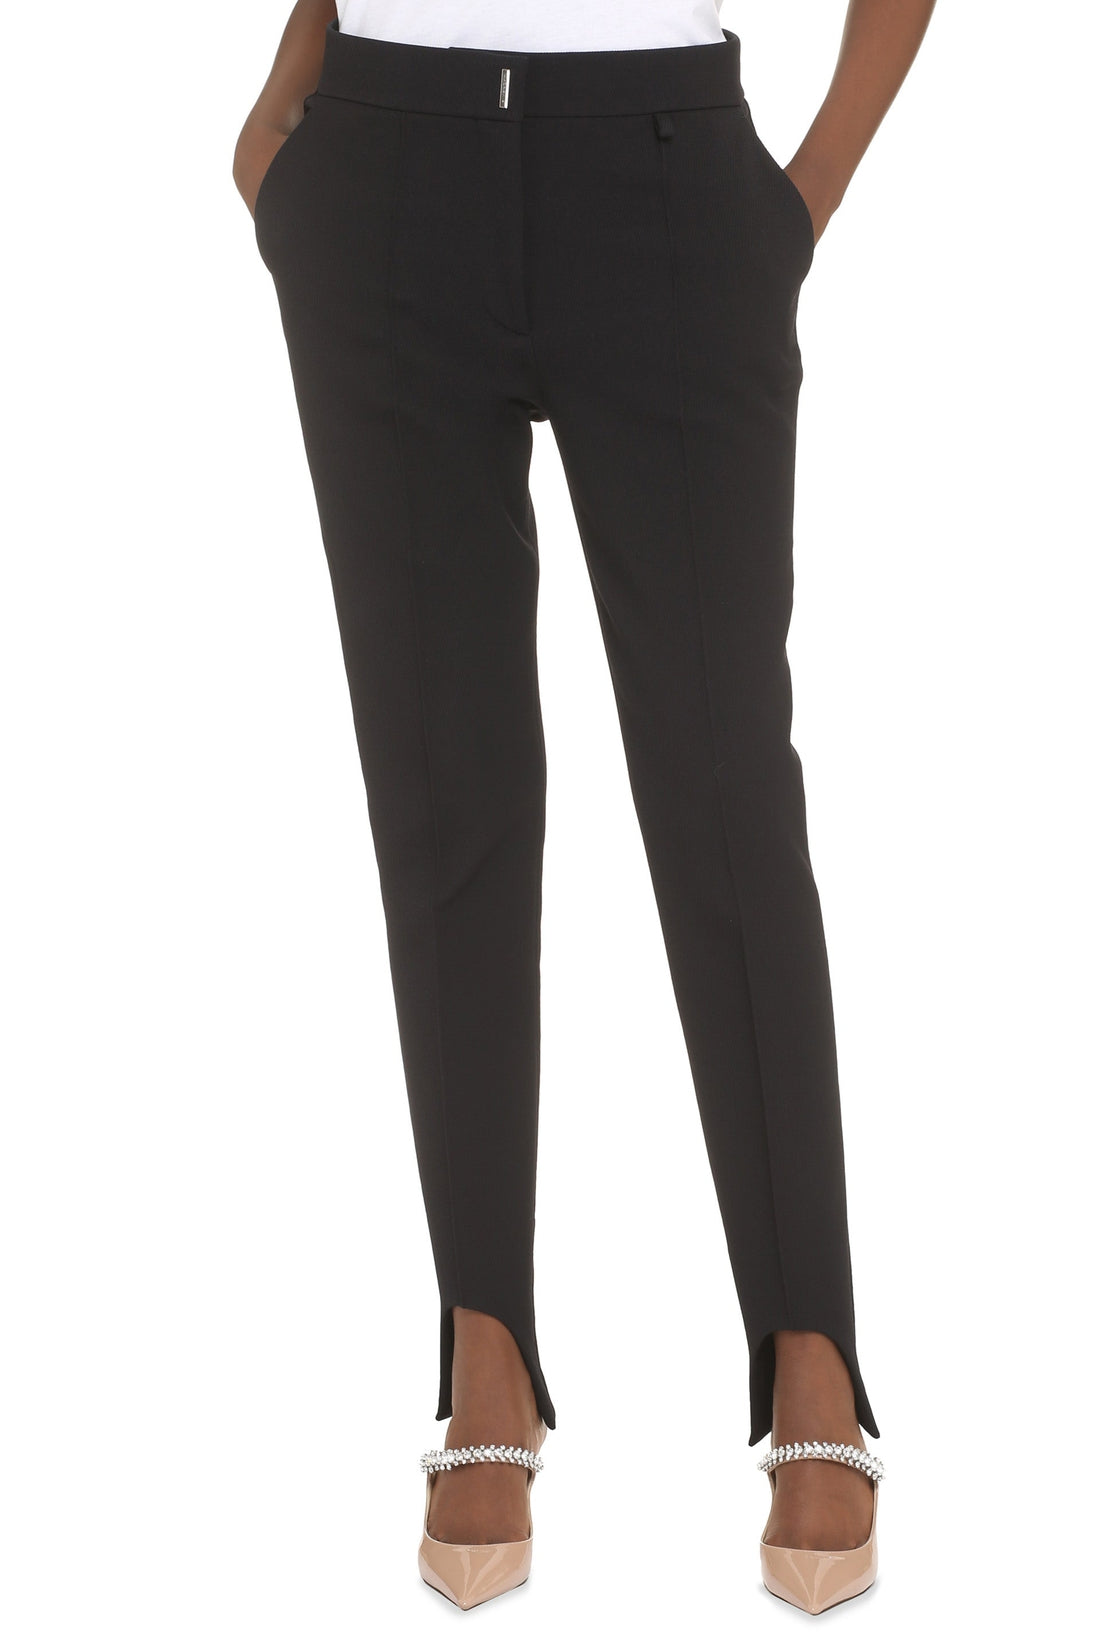 Givenchy-OUTLET-SALE-Super-stretch slim fit trousers-ARCHIVIST